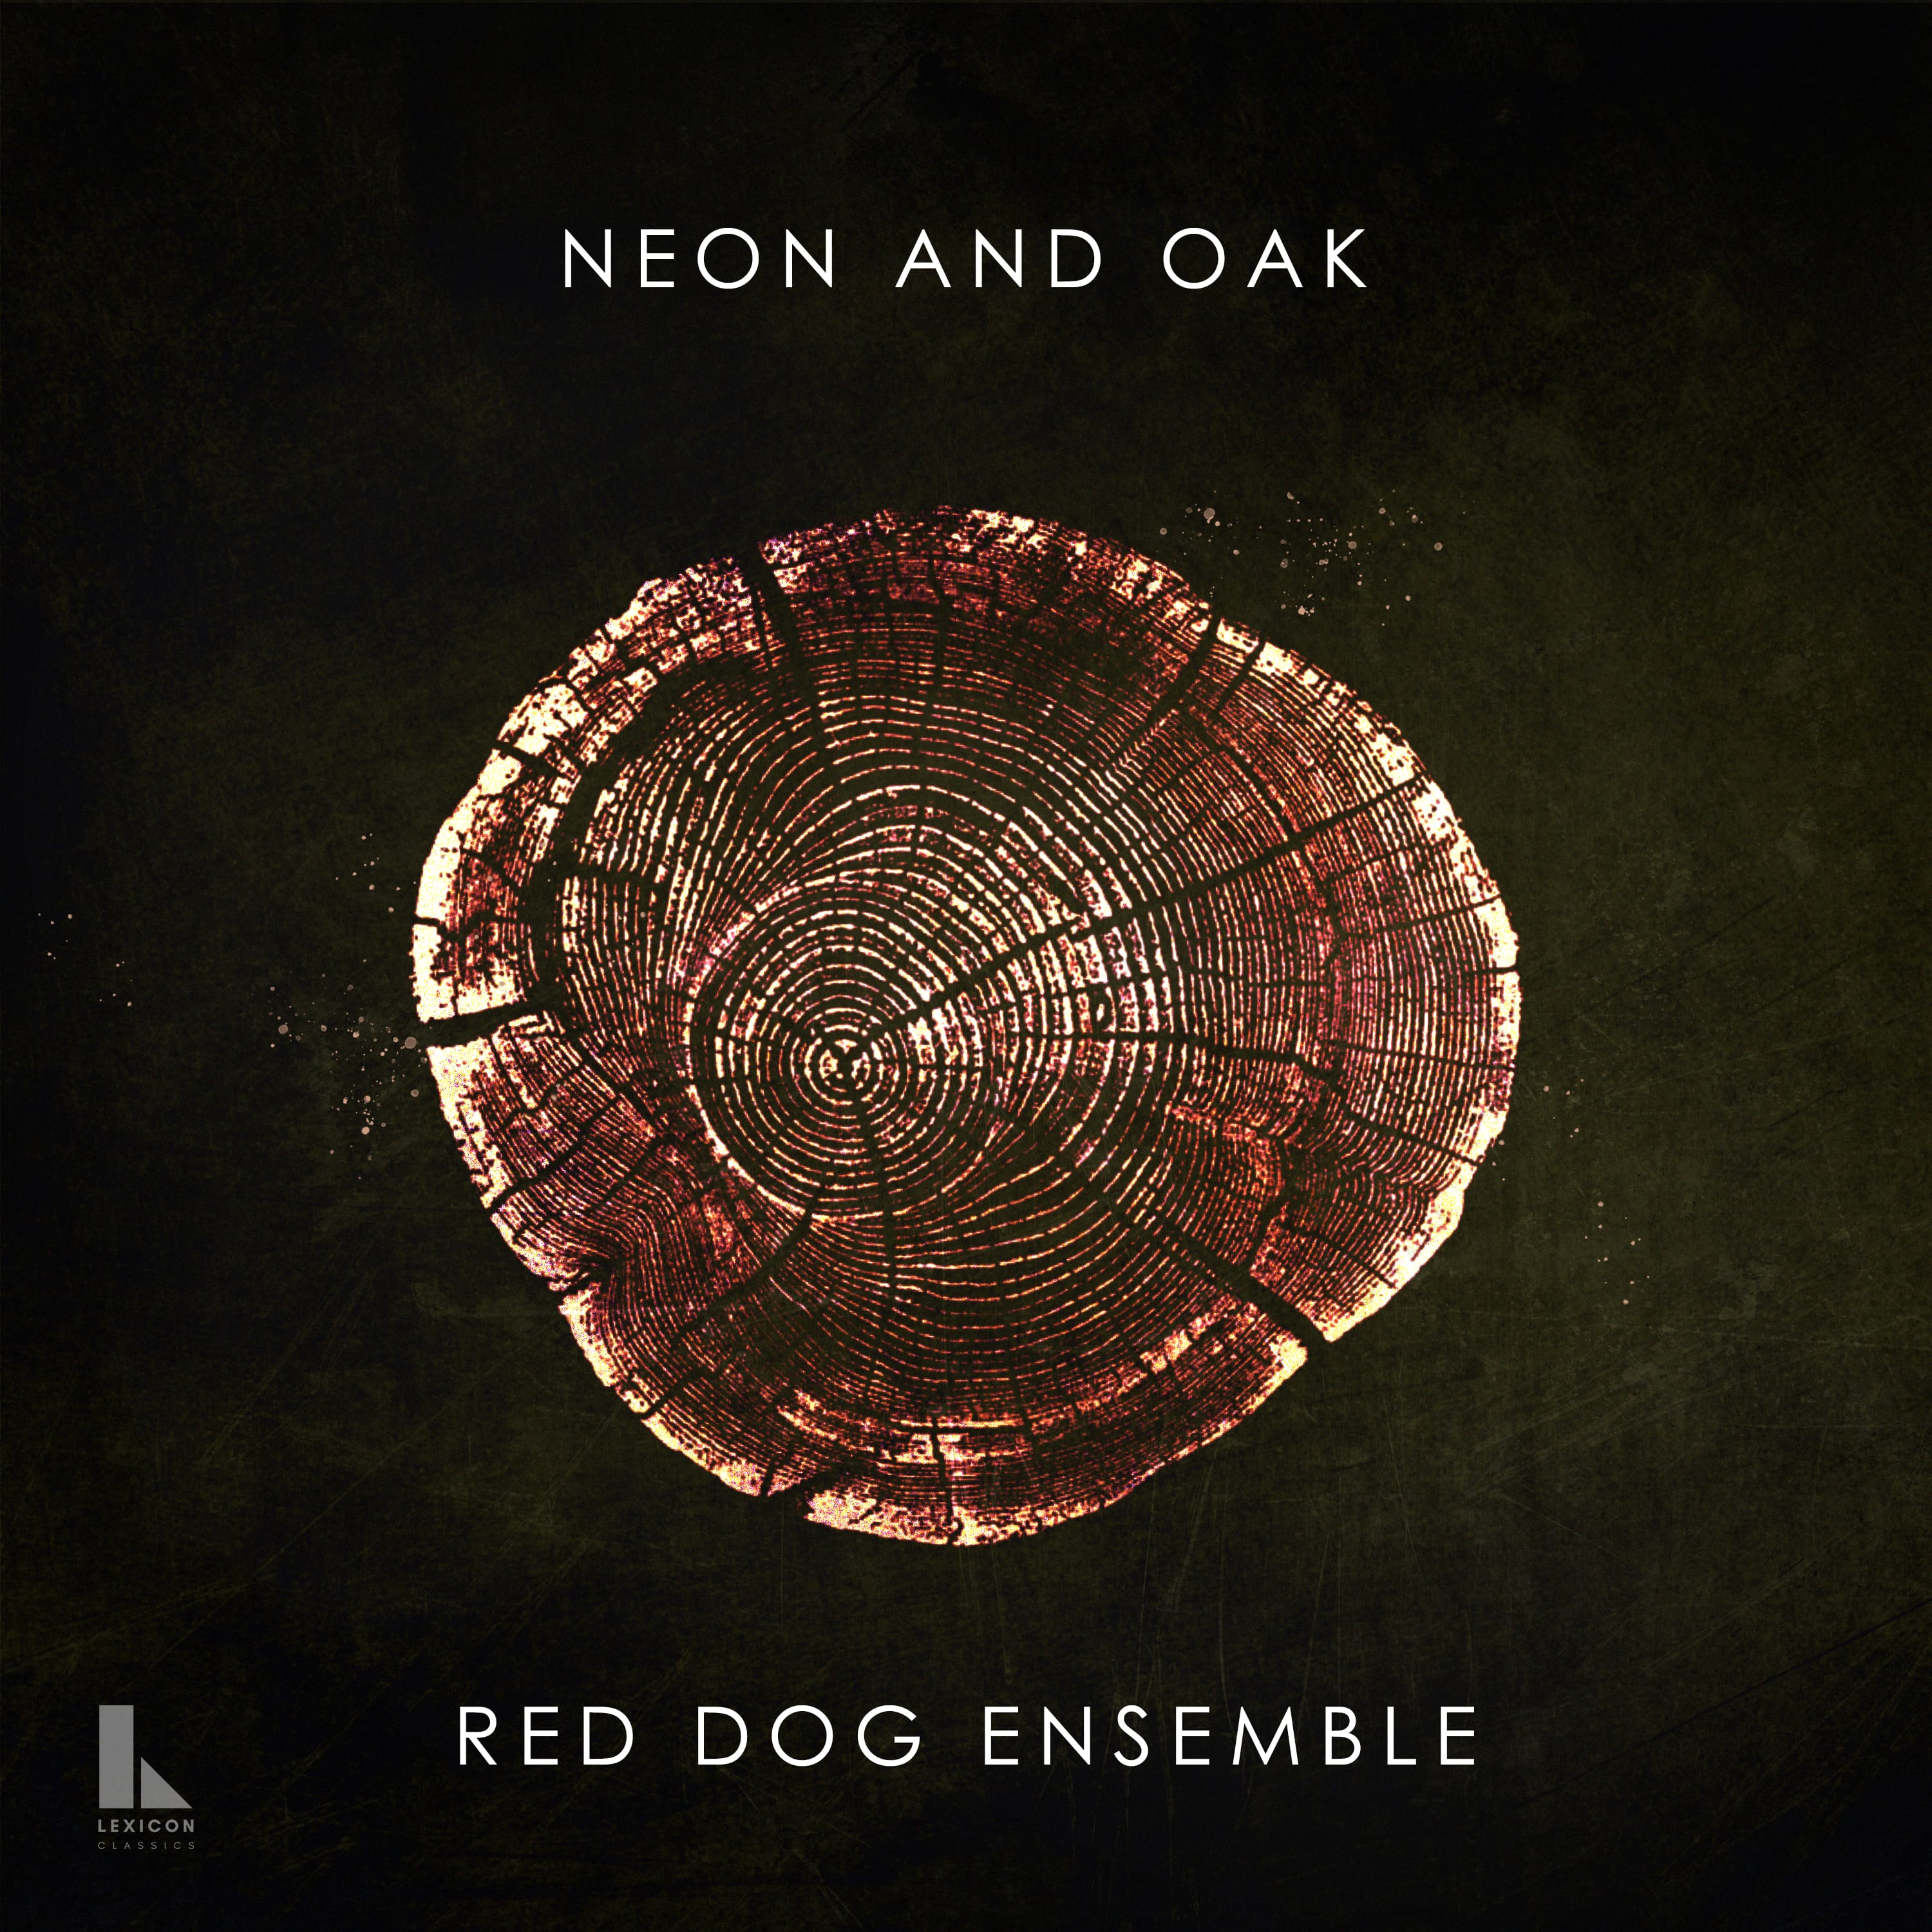 Album Cover of Neon and Oak.